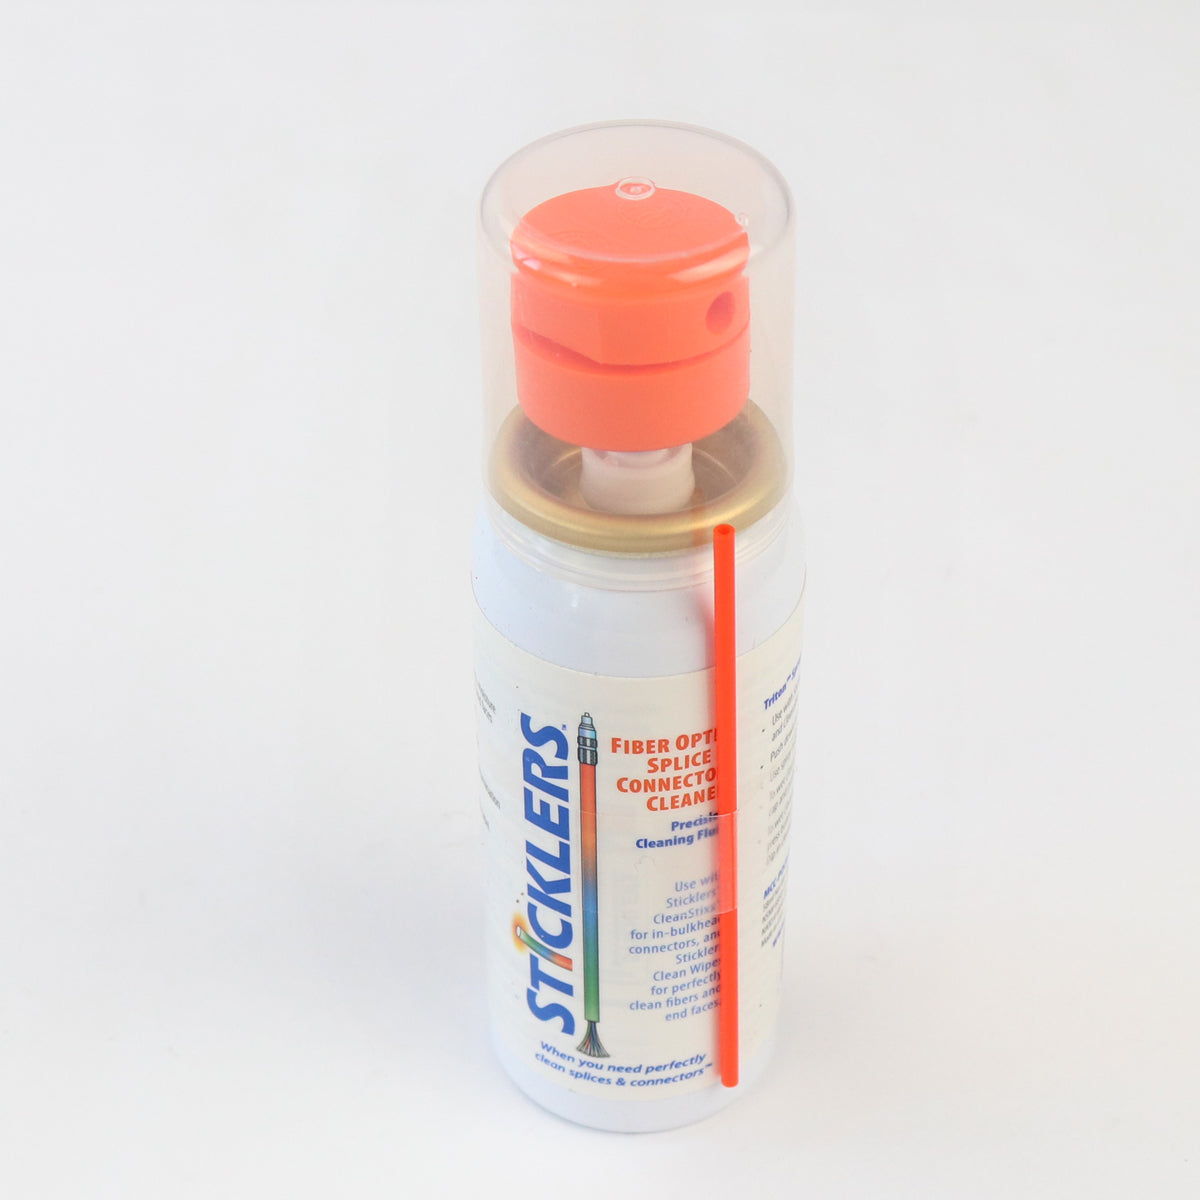 STICKLERS Fiber Optic Splice and Connector Cleaner — 3 OZ. Mini-Pump Spray